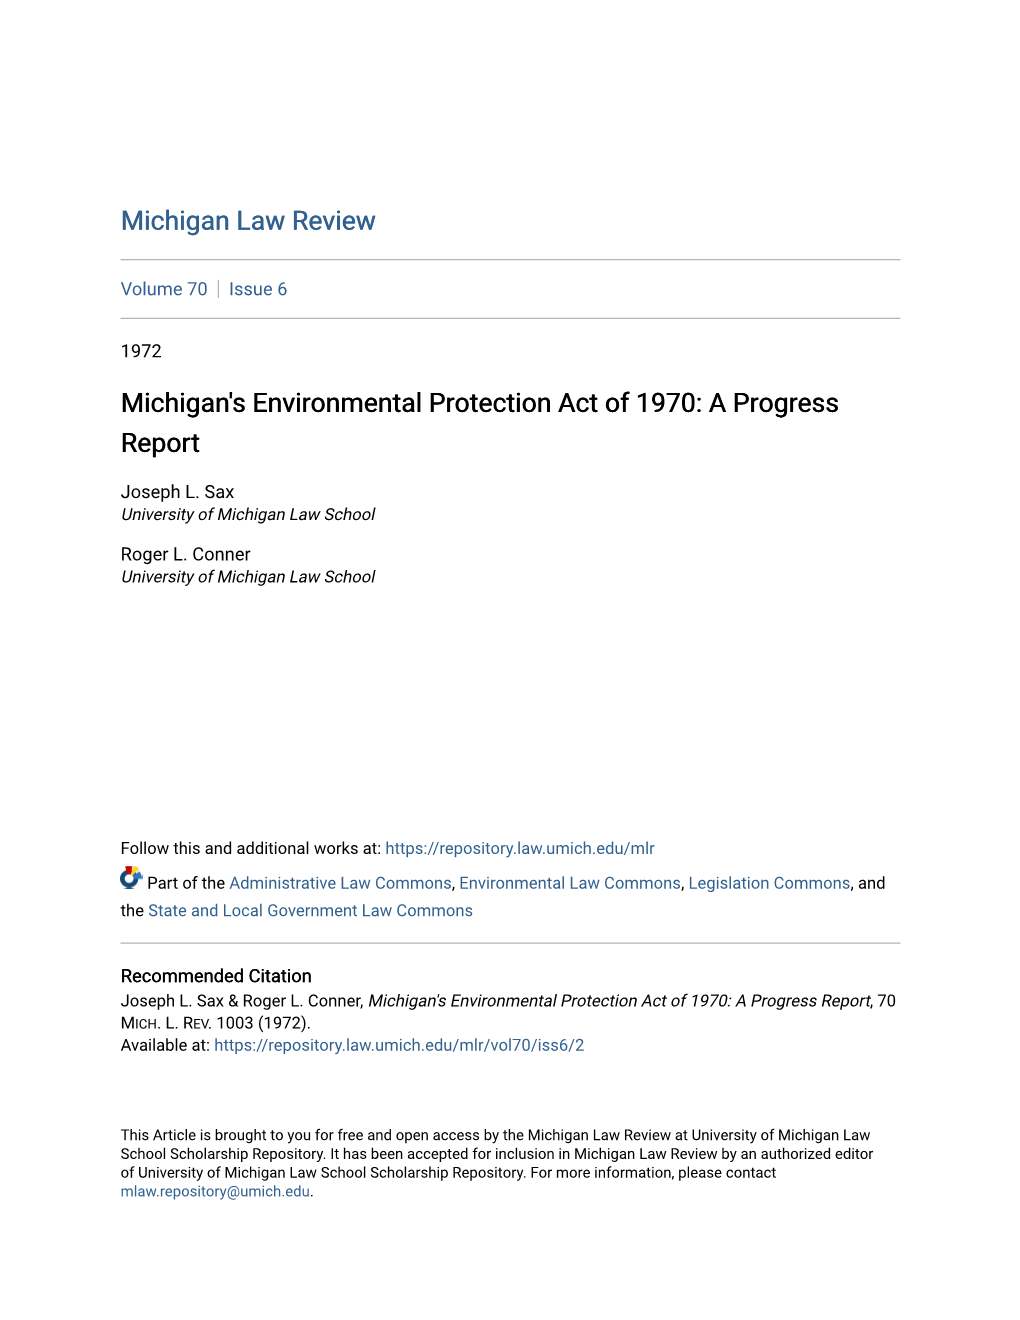 Michigan's Environmental Protection Act of 1970: a Progress Report